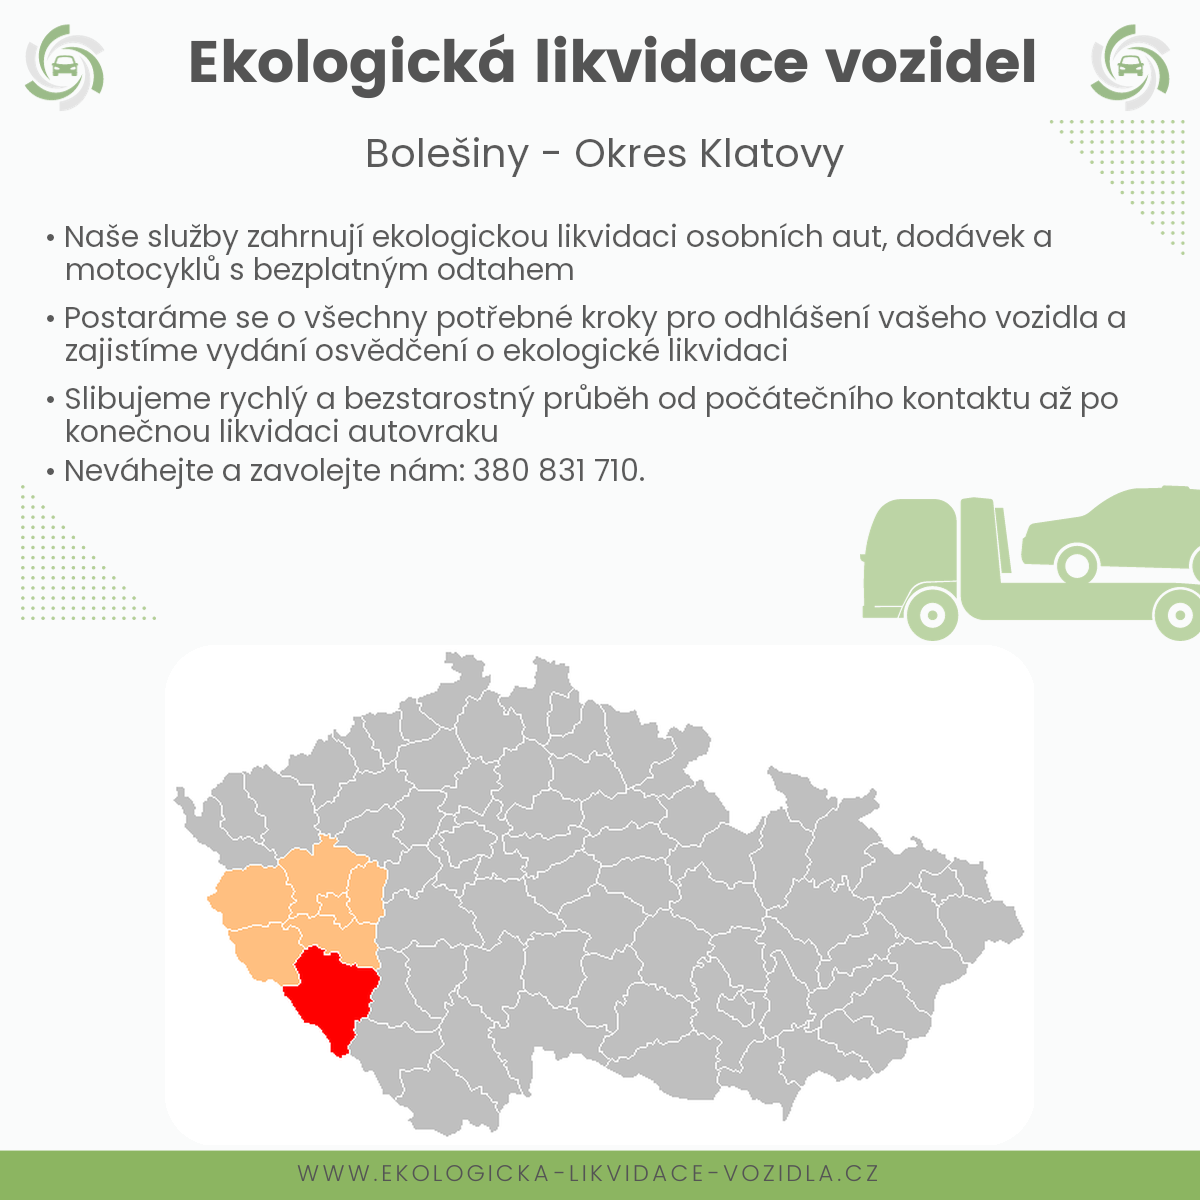 likvidace vozidel - Bolešiny